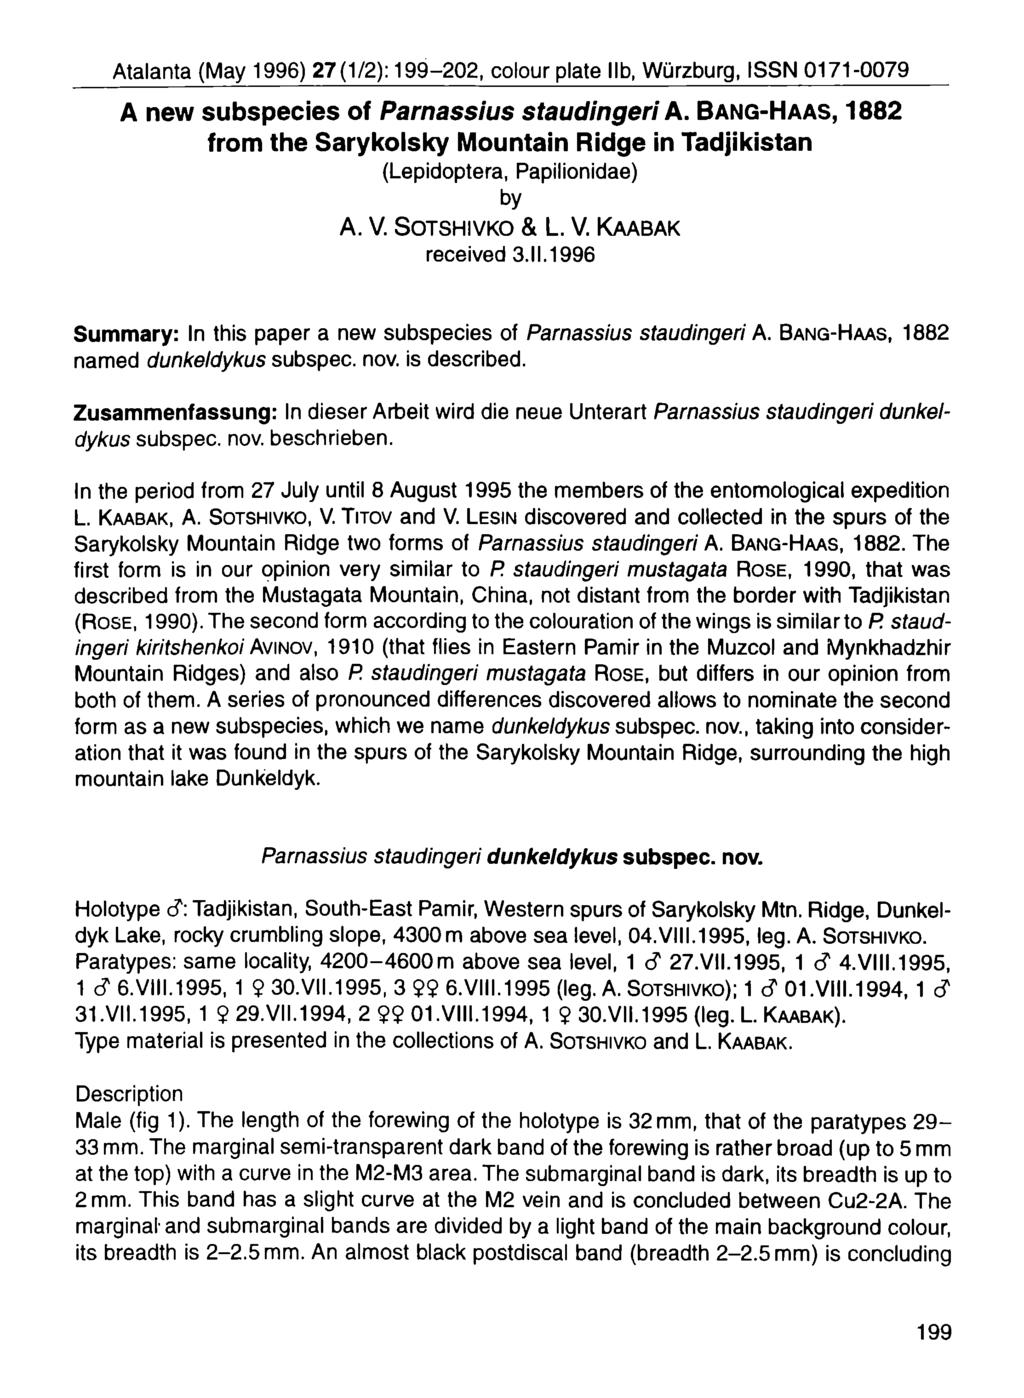 Atalanta (May 1996) 27(1/2): 199-202, colour plate lib, Wurzburg, ISSN 0171-0079 A new subspecies of Parnassius staudingeri A.